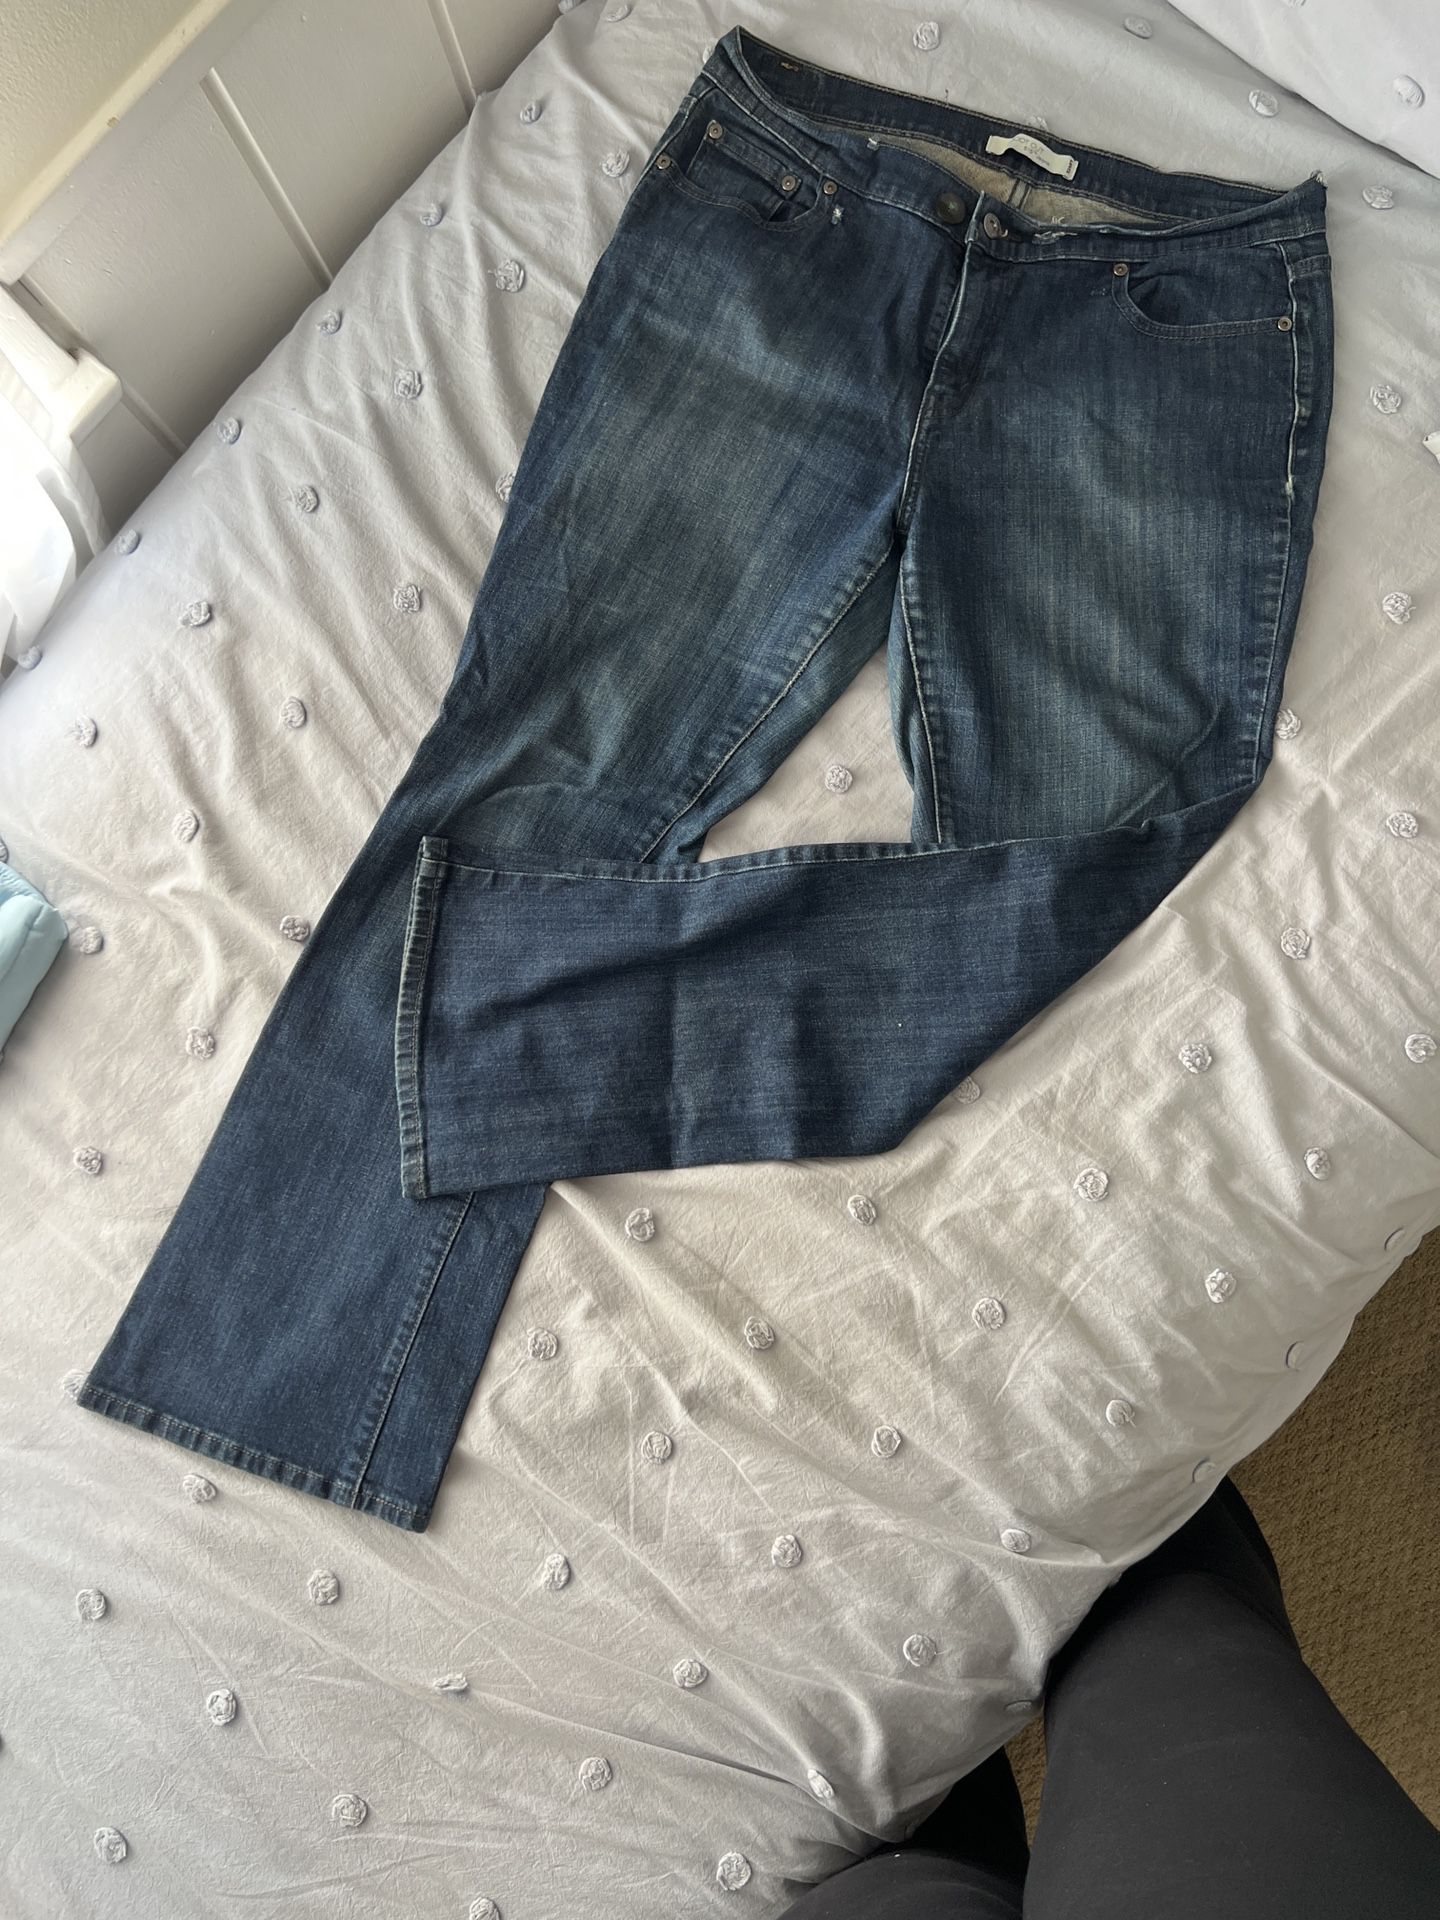 LEVIS 515 Boot Cut Jeans . Size 14. Women for Sale in Downey, CA - OfferUp